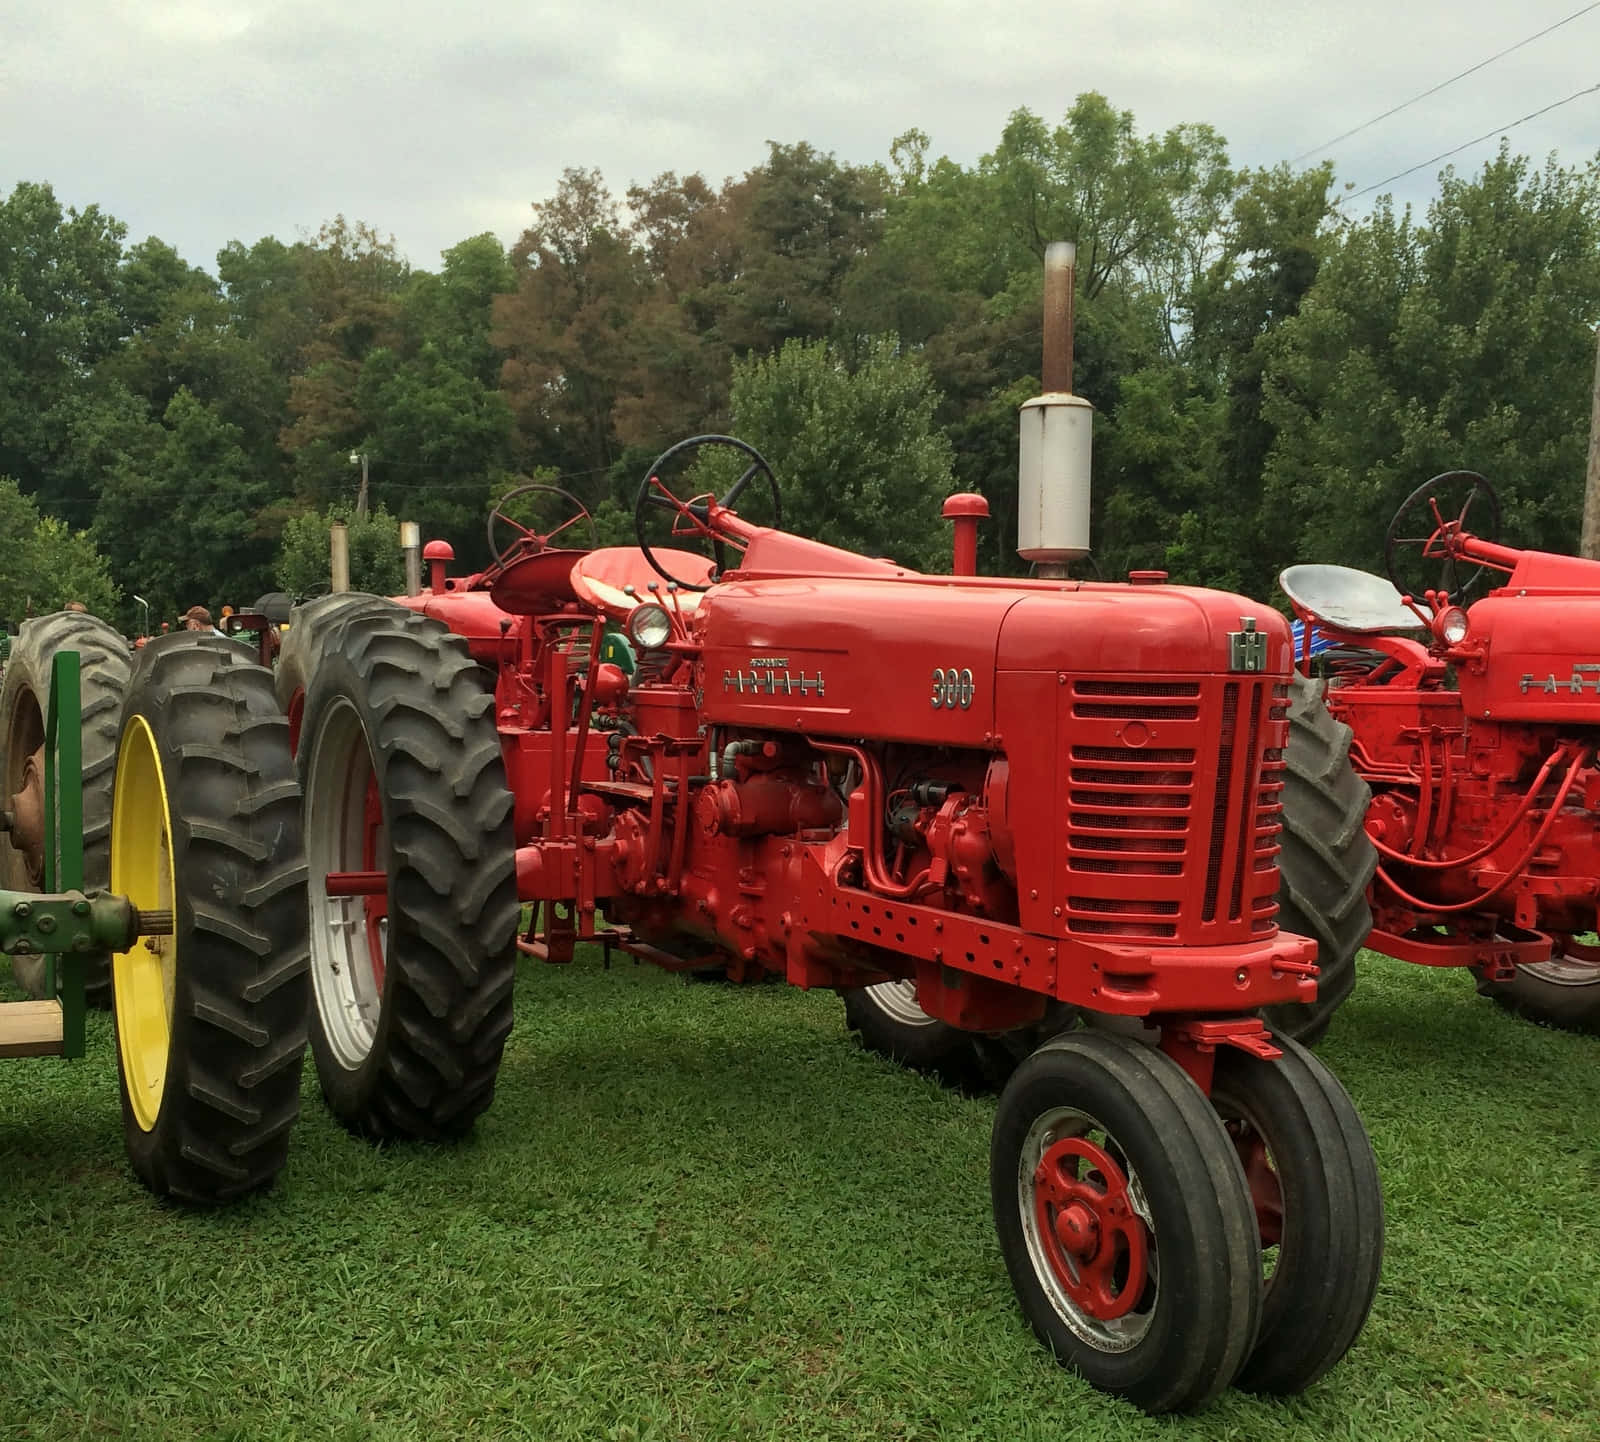 Caption: Powerful agriculture tractor on a farm